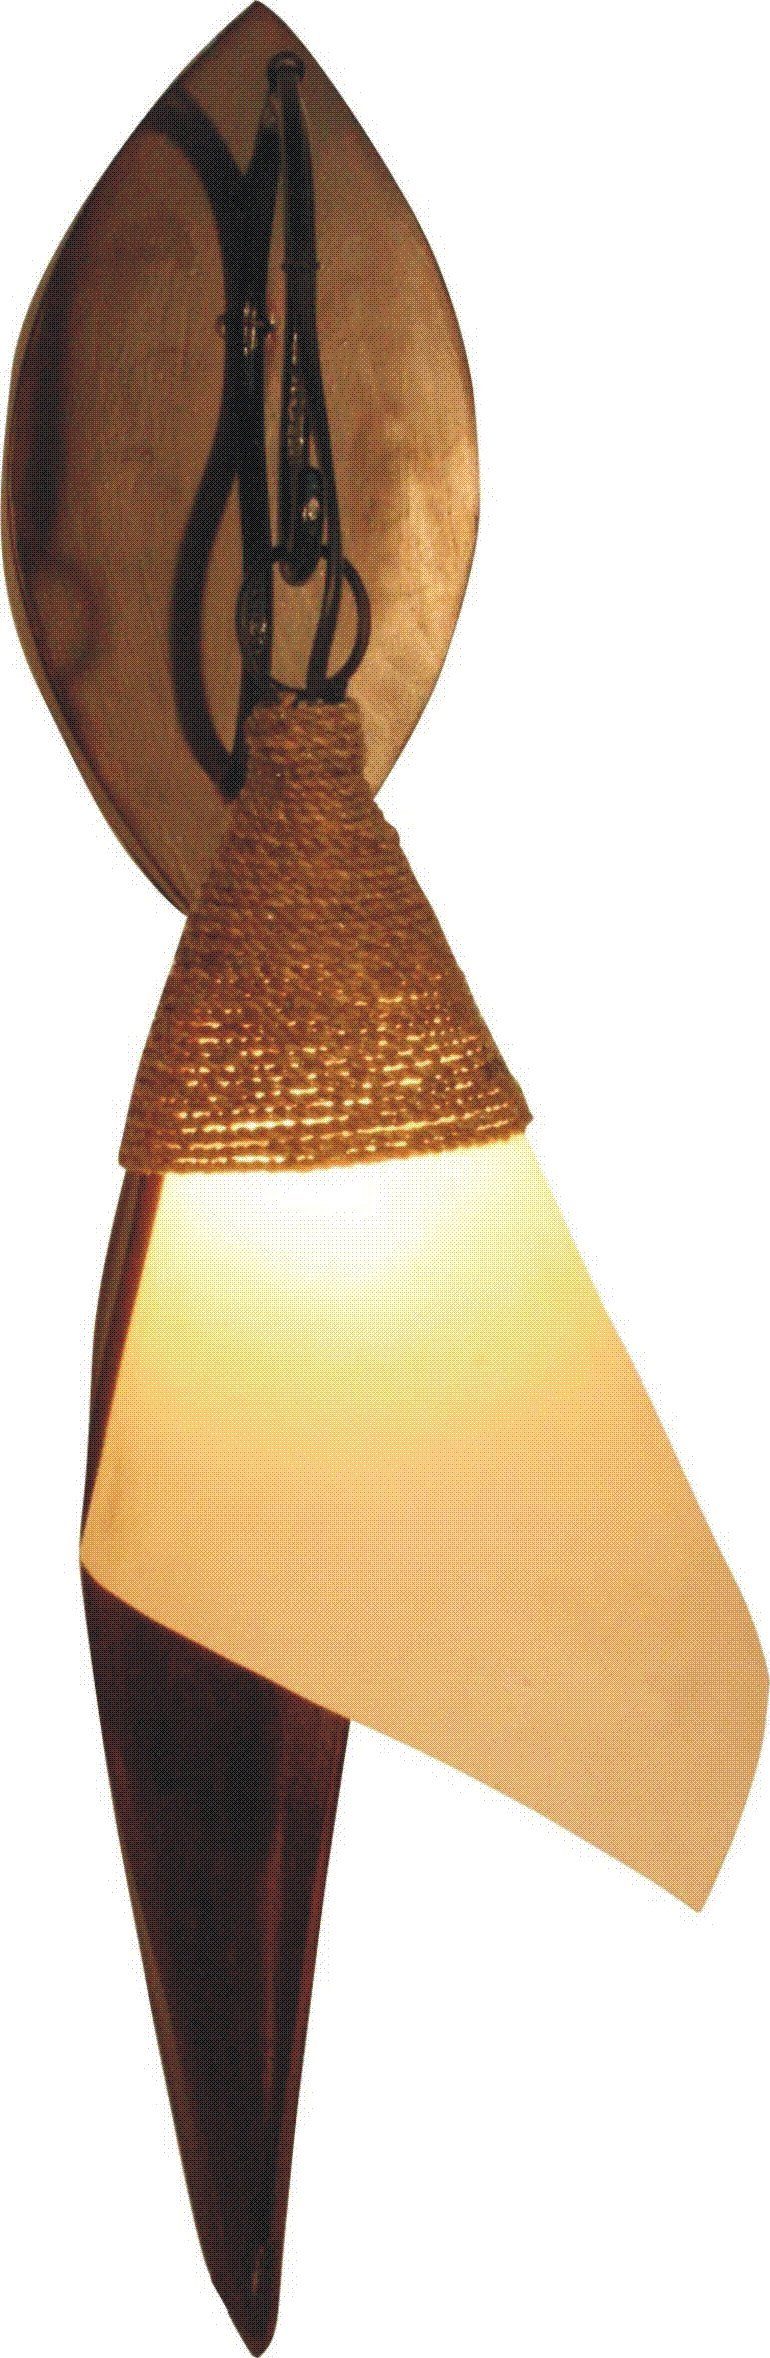 Guru-Shop Wandleuchte Palmenblatt Wandlampe, in Bali handgefertigt.., Leuchtmittel nicht inklusive